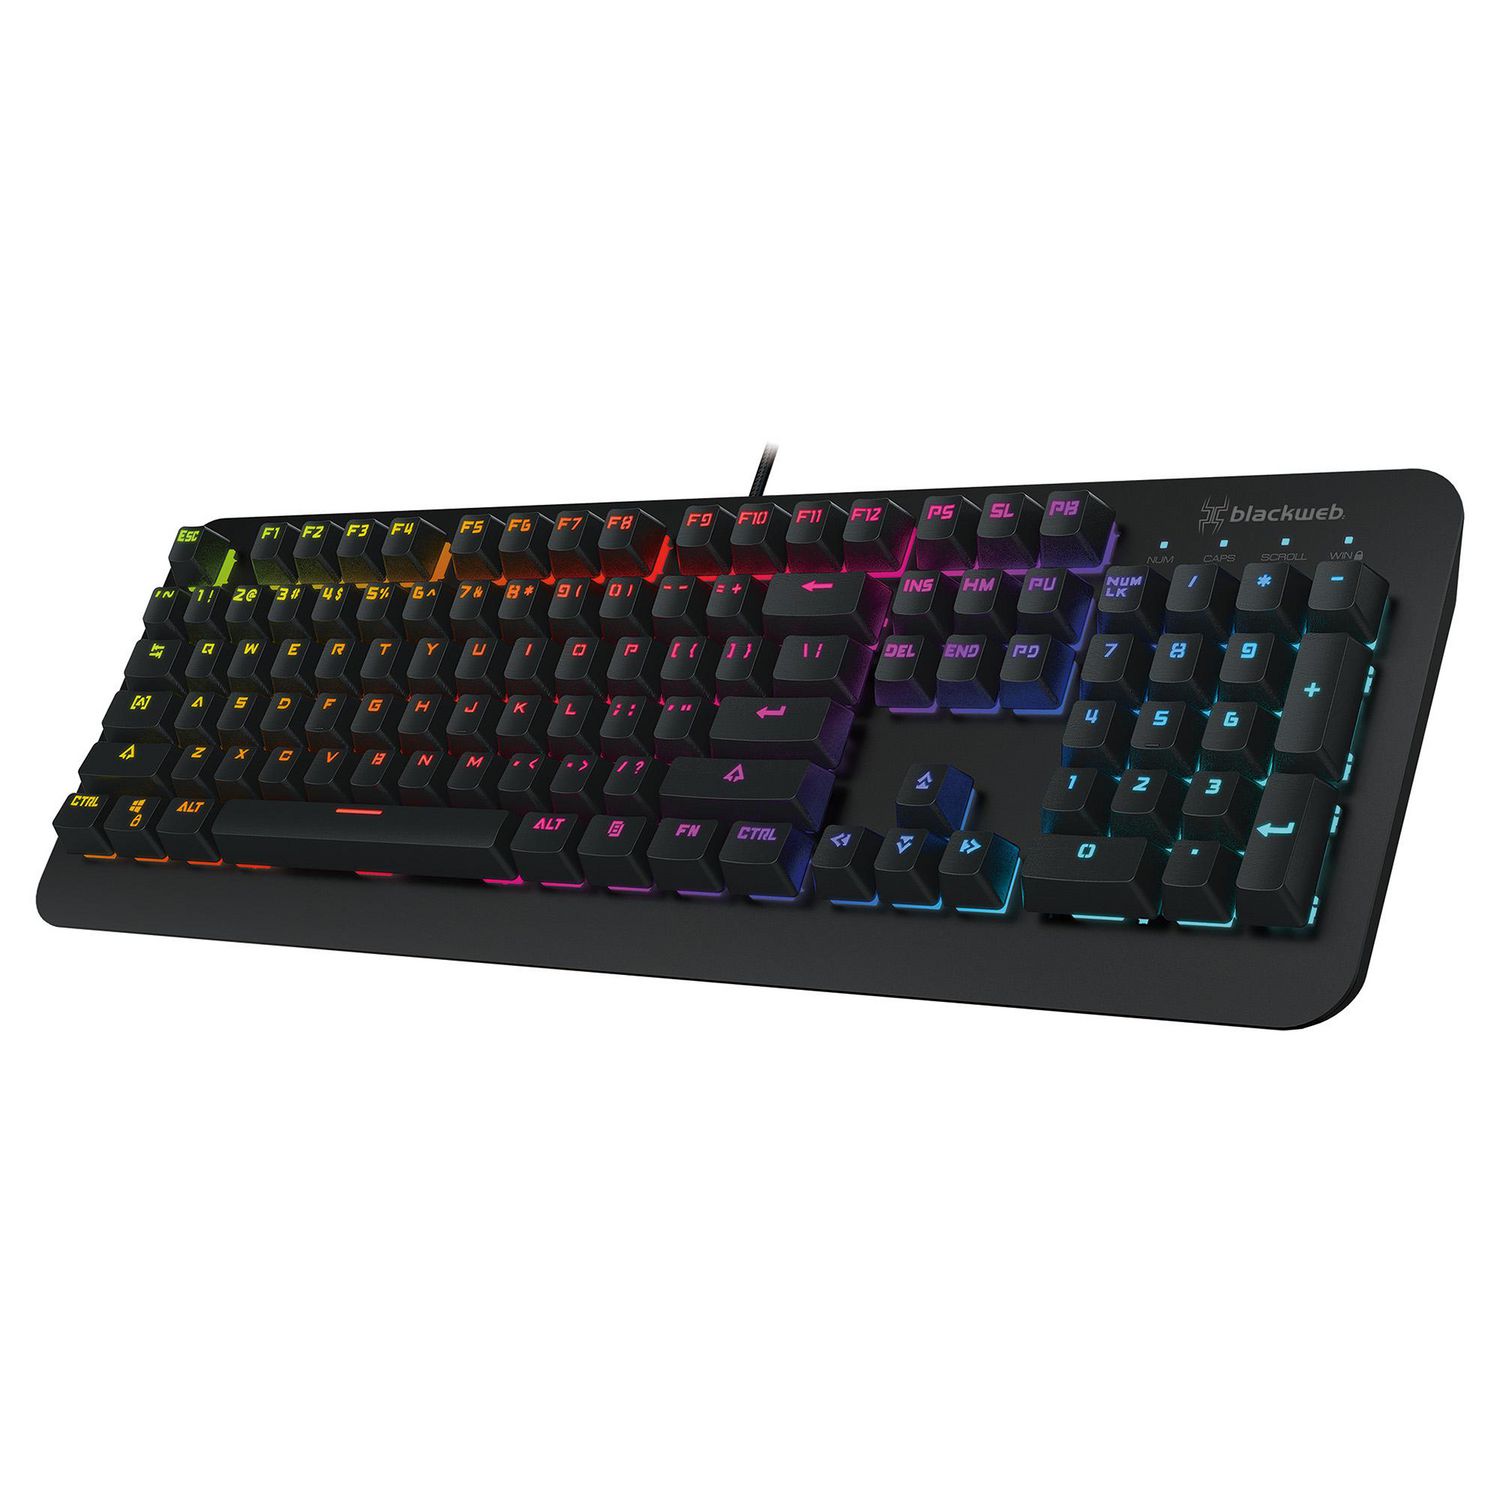 blackweb Wired RGB Mechanical Gaming Keyboard (Rich Black)